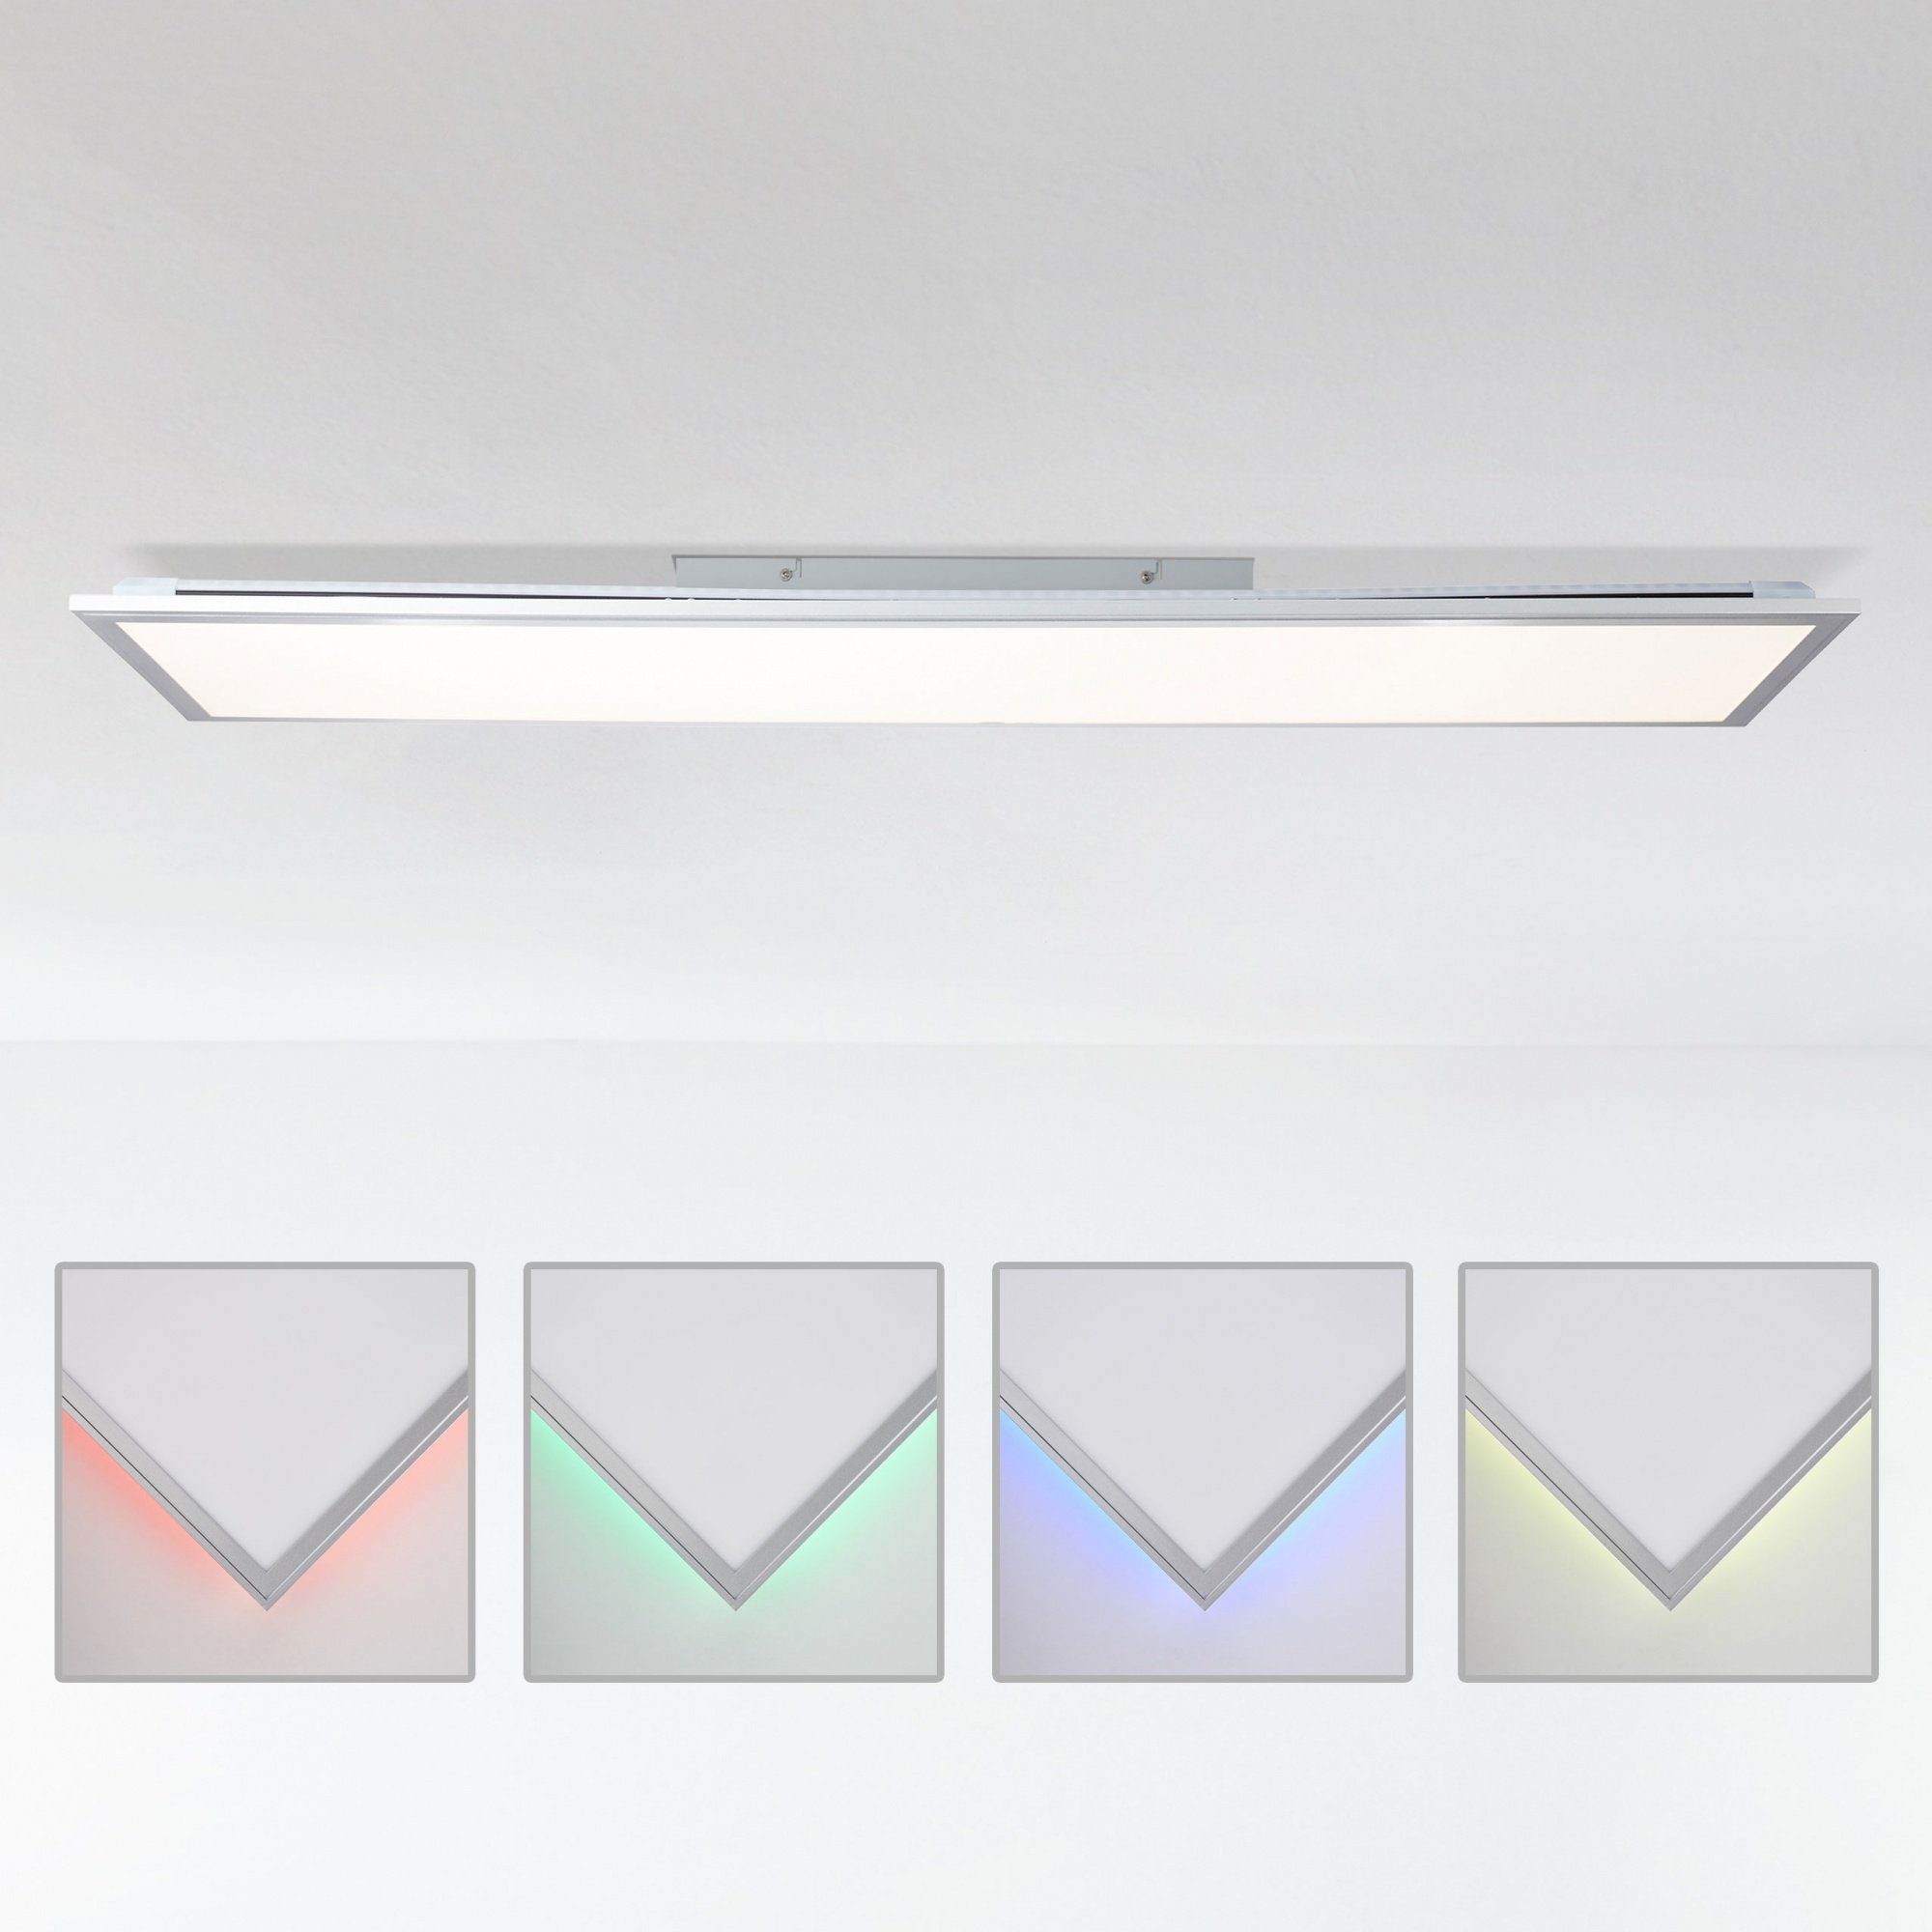 Lightbox LED Panel, CCT - über Fernbedienung, LED fest integriert, warmweiß - kaltweiß, dimmbares Aufbaupaneel 120x30cm, mit RGB Backlight, Metall/Kunststoff | Panels